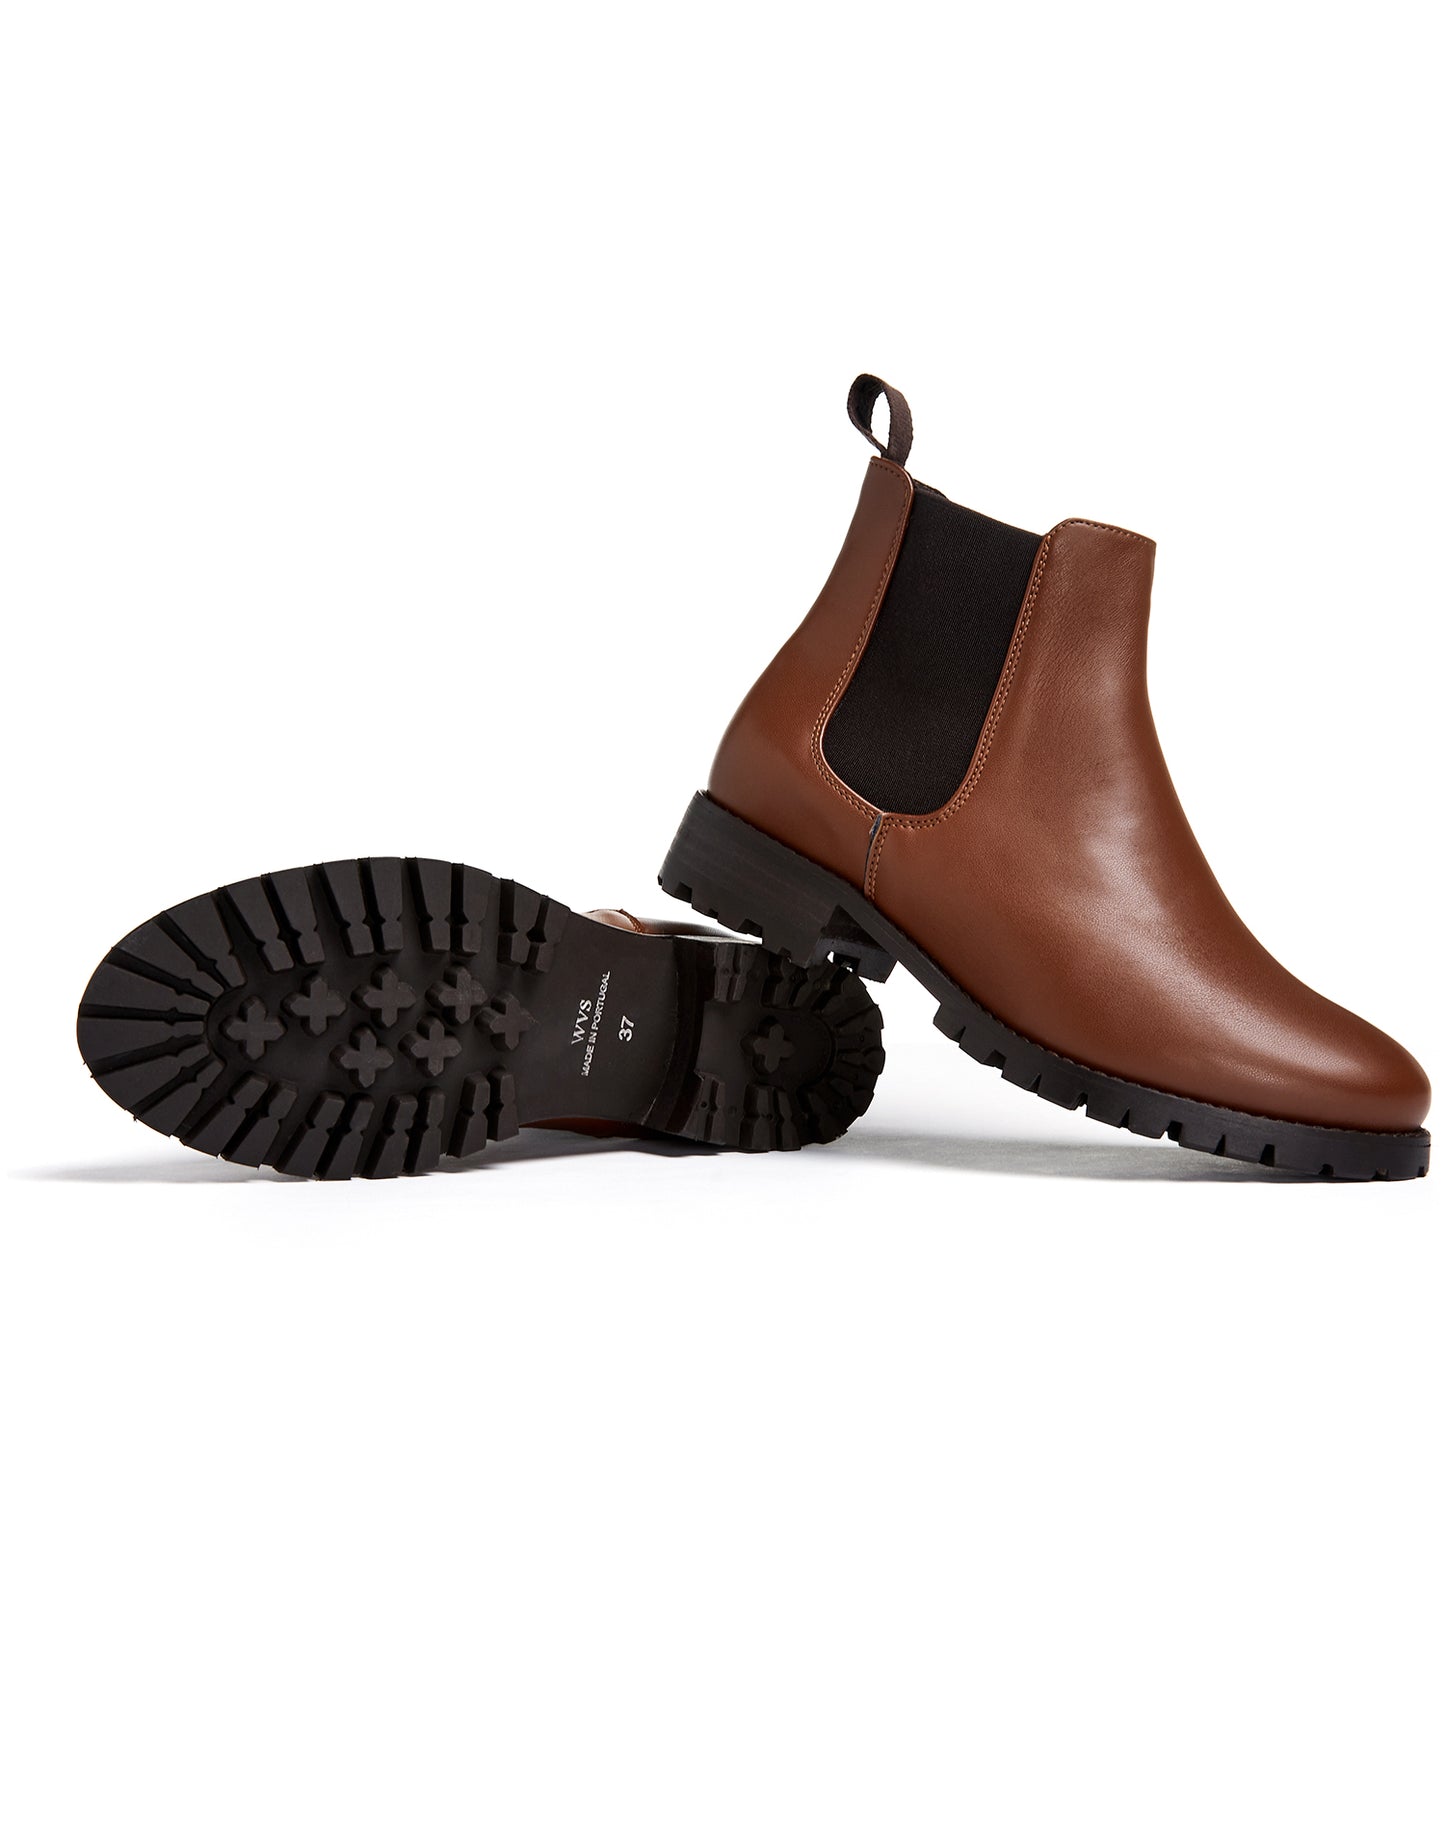 Luxe Deep Tread Chelsea Boots